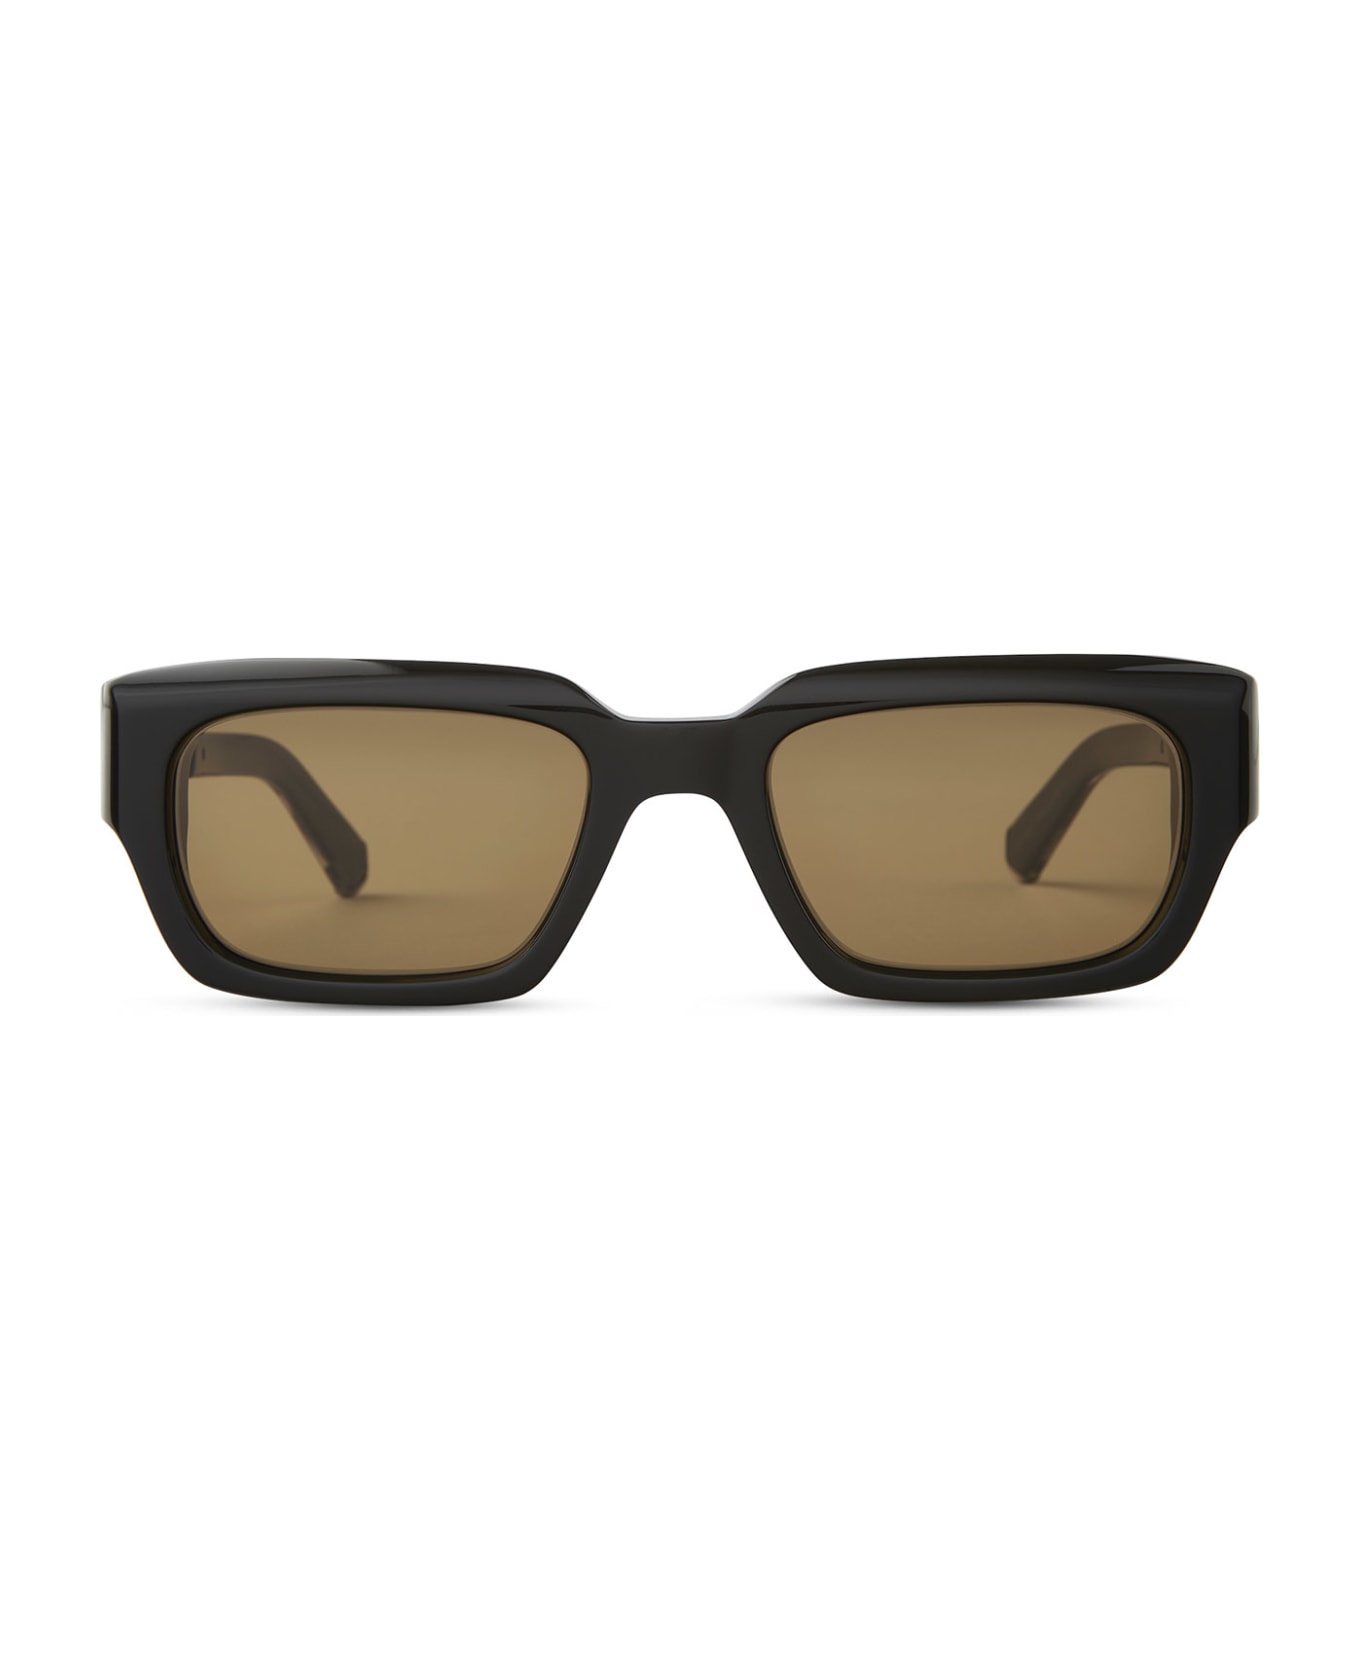 Mr. Leight Maverick S Black-pewter Sunglasses Ft0846 -  Black-Pewter